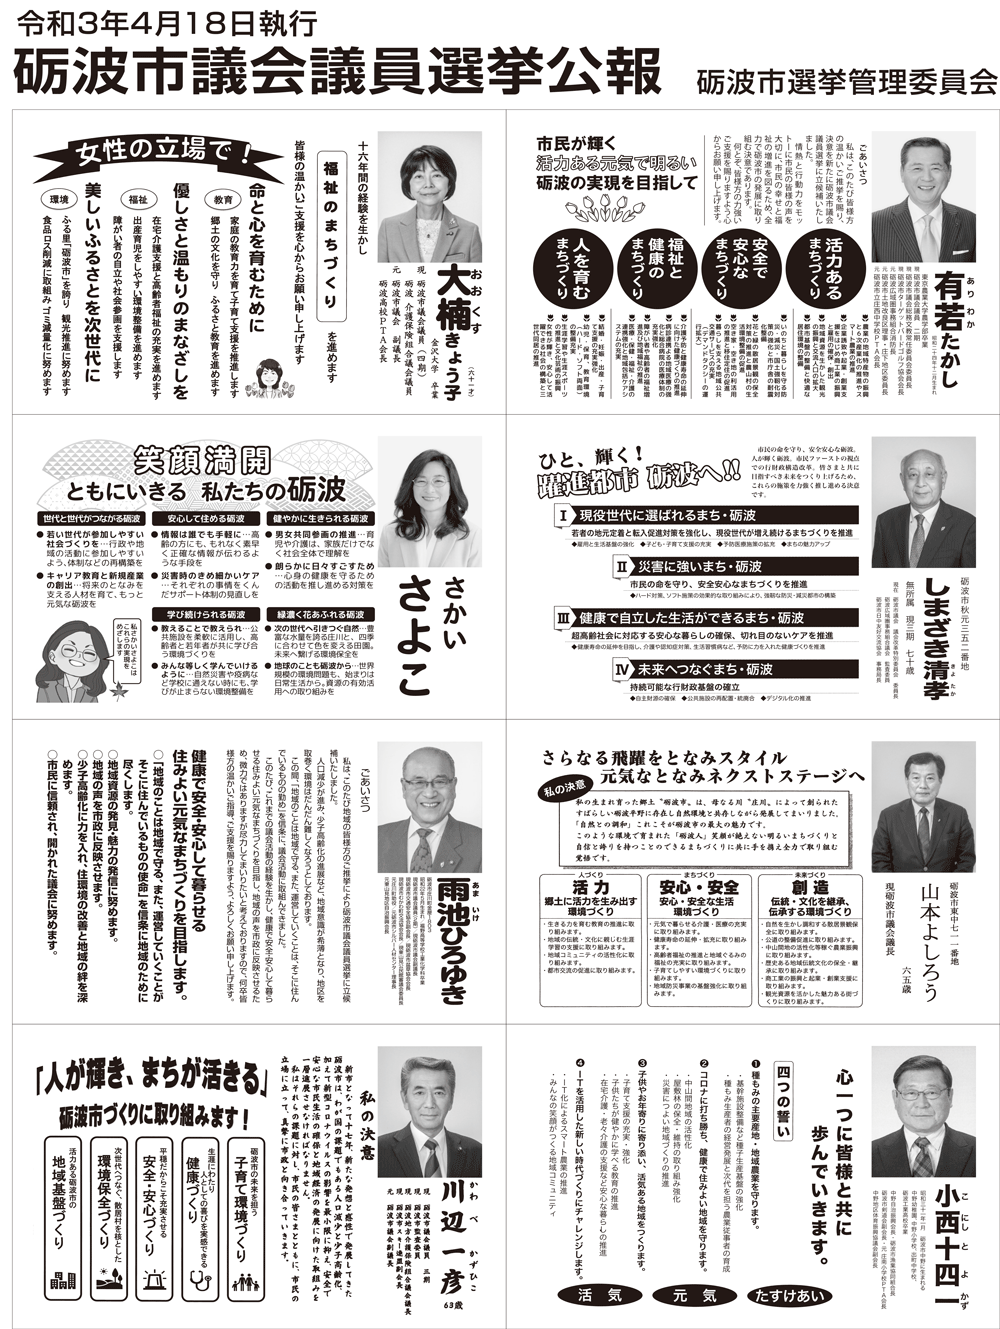 砺波市議会議員選挙2021の選挙公報1